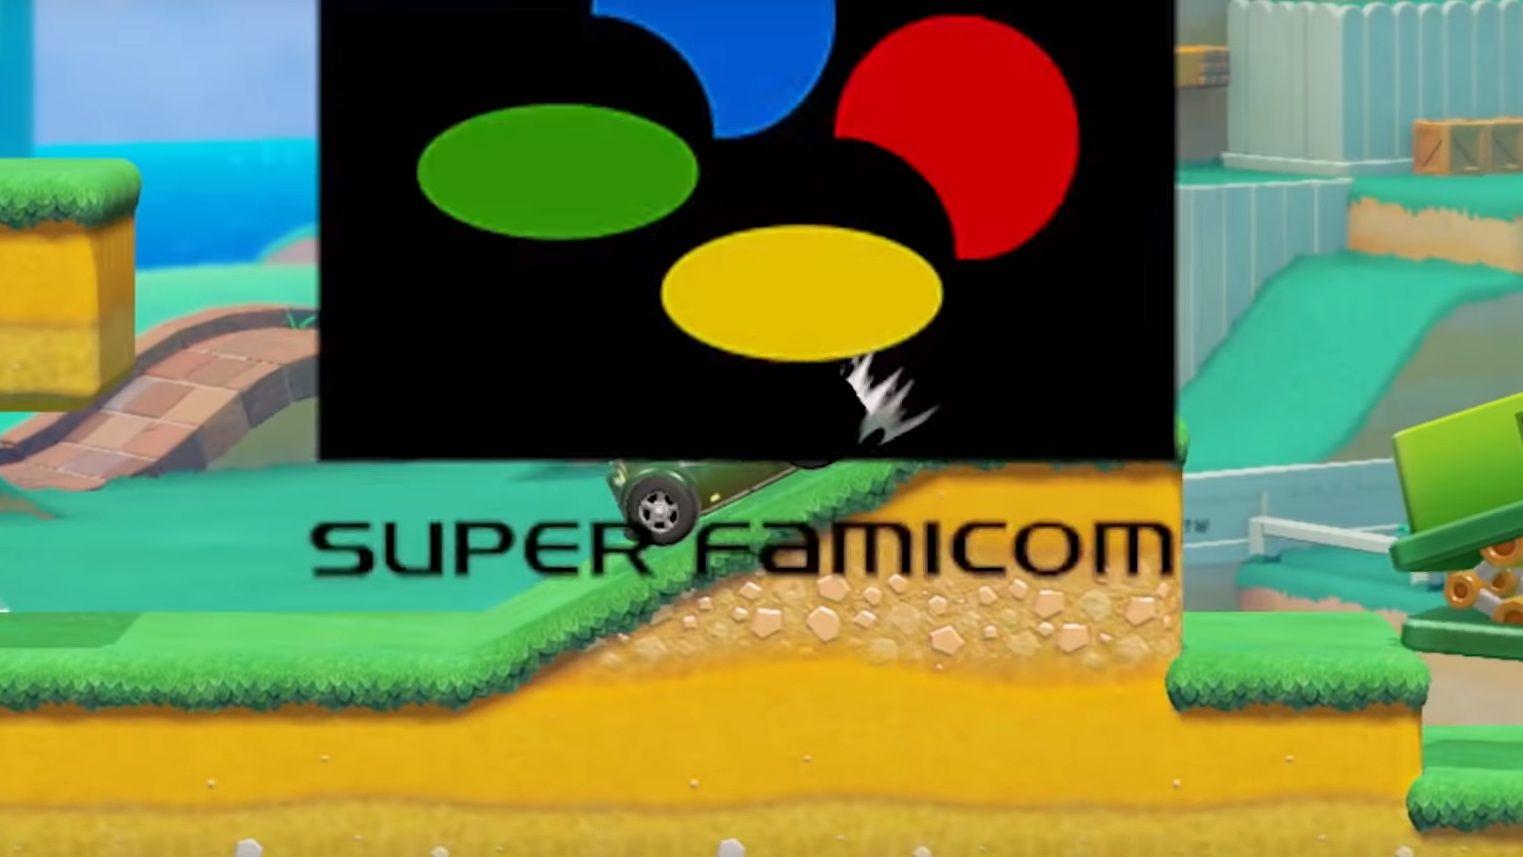 Famicom Logo - Super Famicom Logo In Super Mario Maker 2 Has Fans Speculating